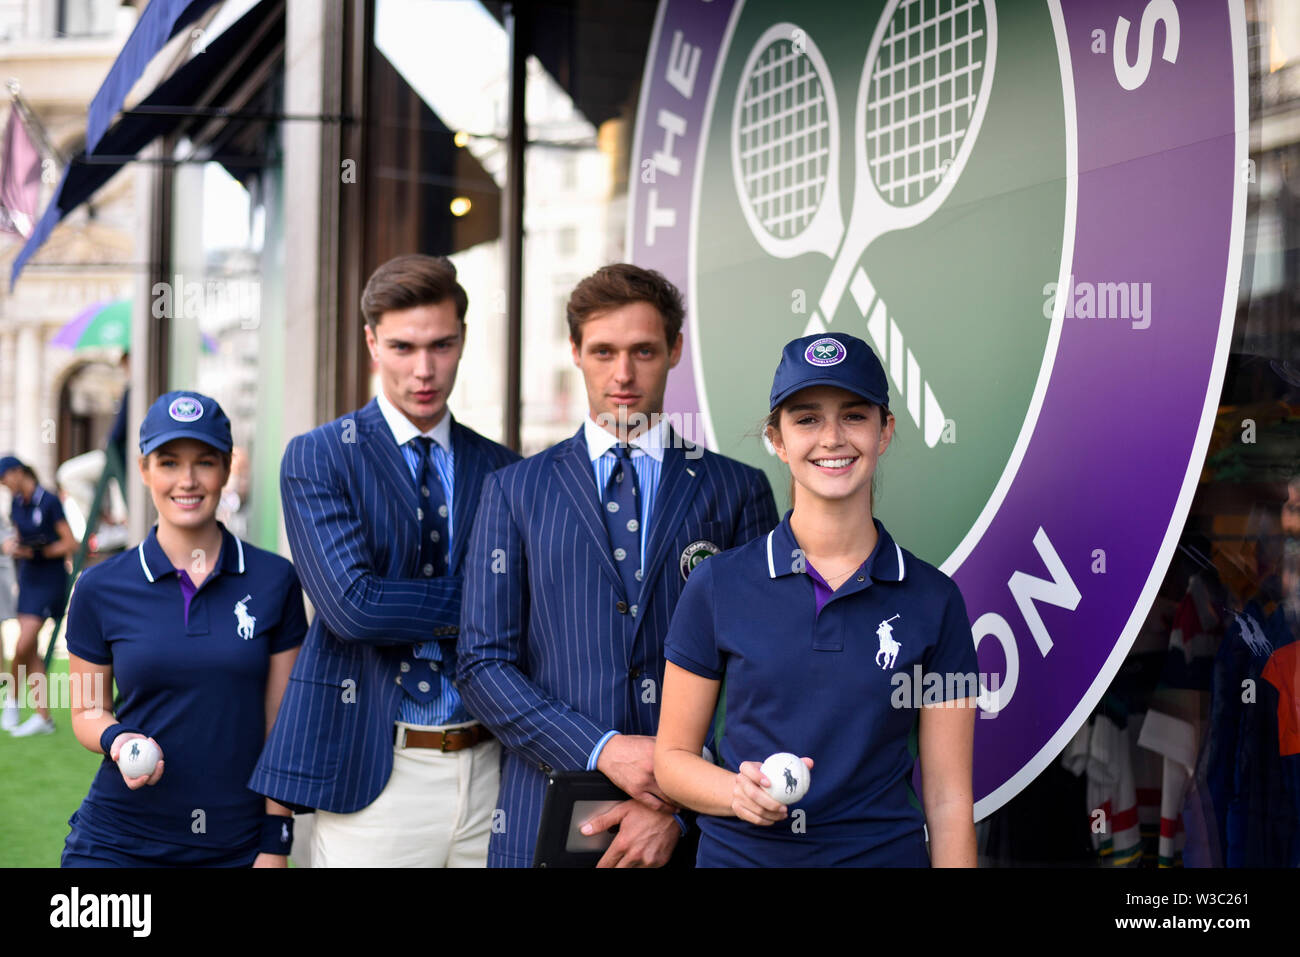 London, UK. 14 July 2019. Promotional staff dress as Wimbledon line judges  and ballgirls outside the